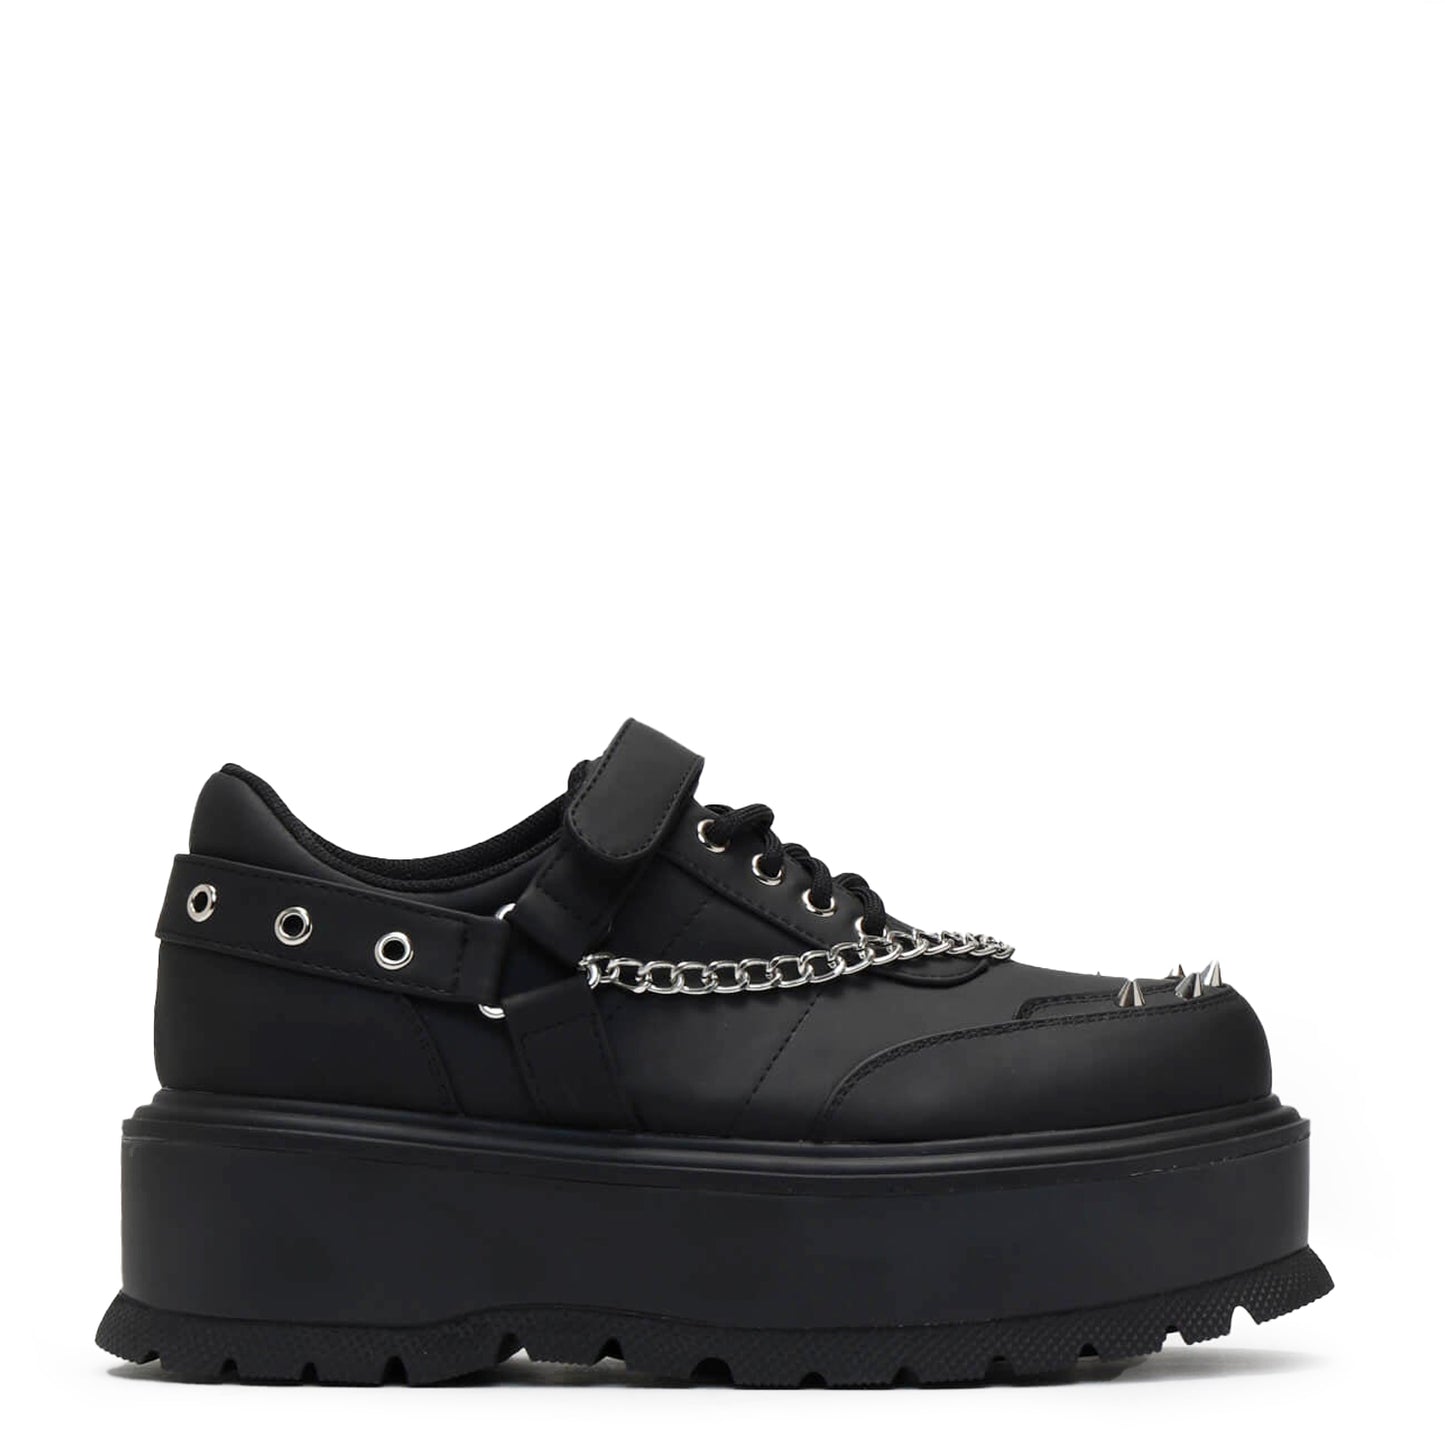 Retrograde Rebel Men's Black Platform Shoes - Shoes - KOI Footwear - Black - Main View